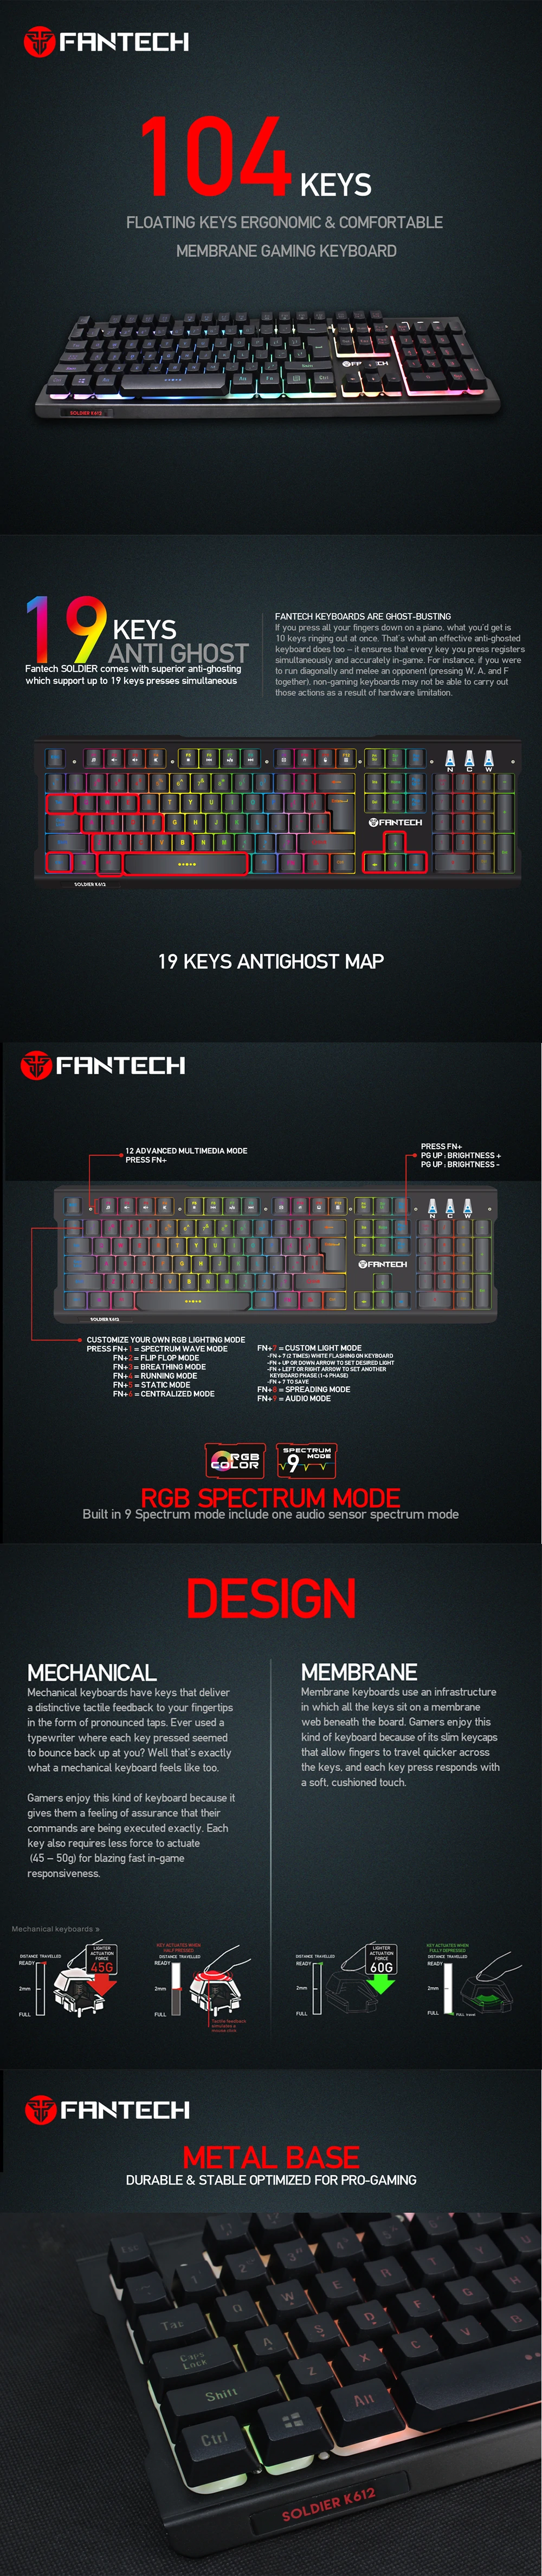 Specifications - Solider K612 - Metal Backlit Gaming Keyboard